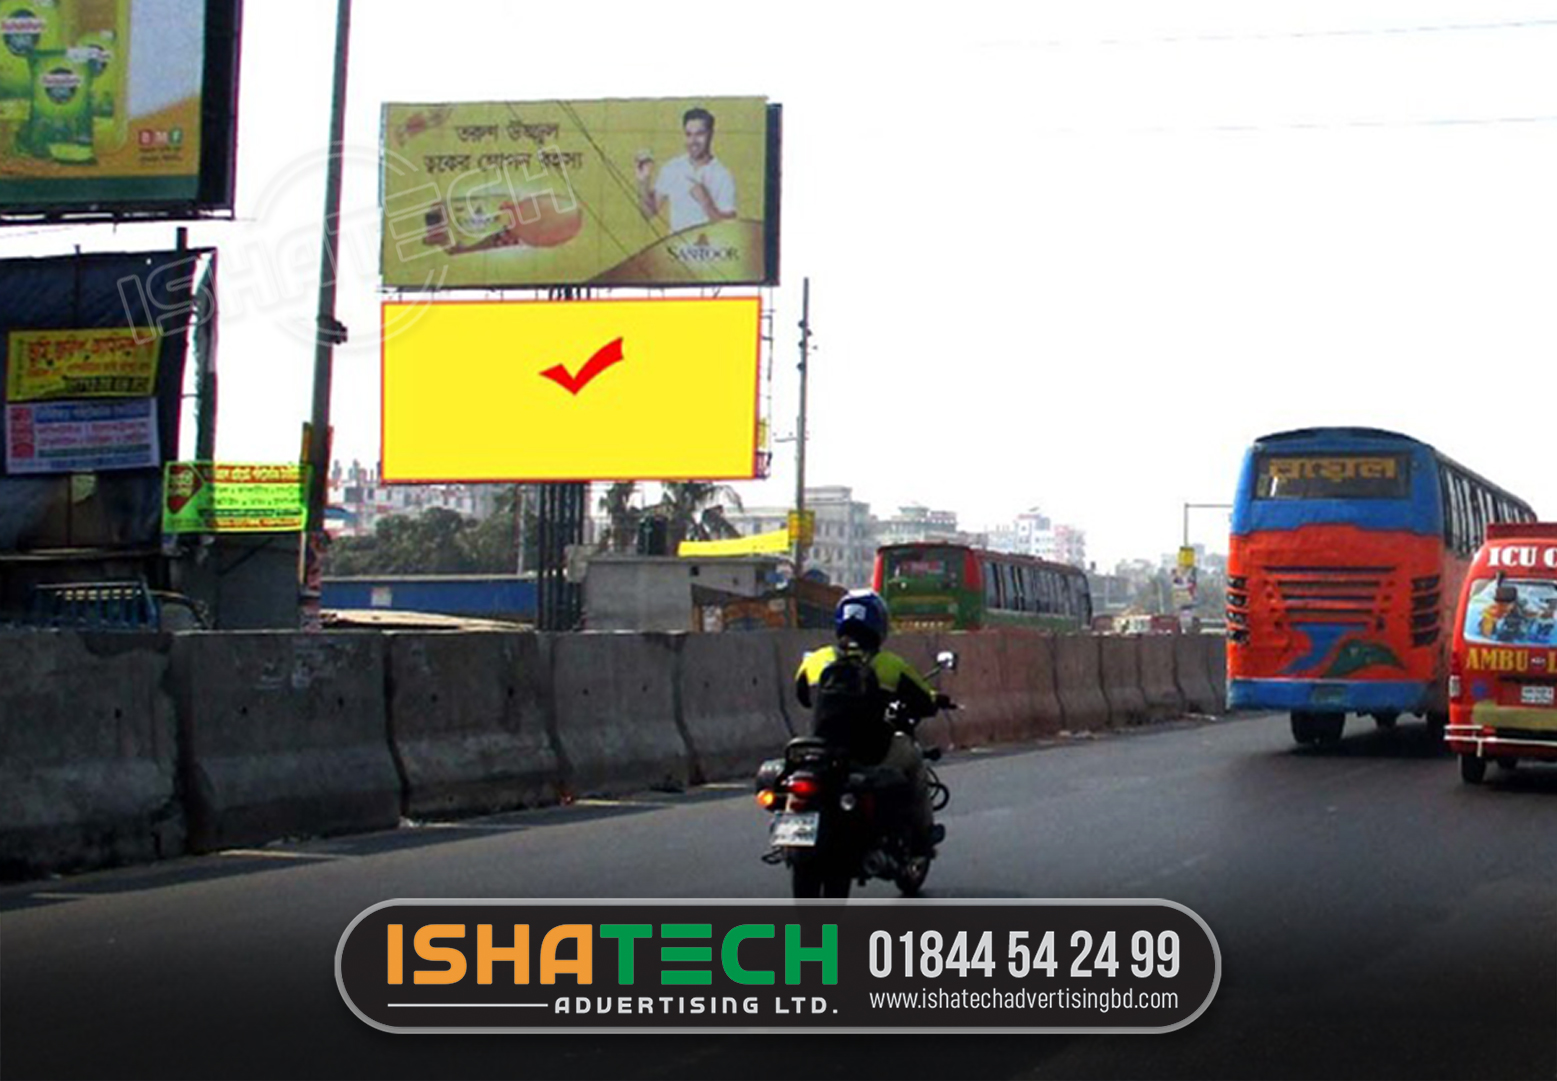 DHAKA CHITTAGONG HIGHWAY OUTDOOR LED BILLBOARD ADS IN DHAKA, BANGLADESH